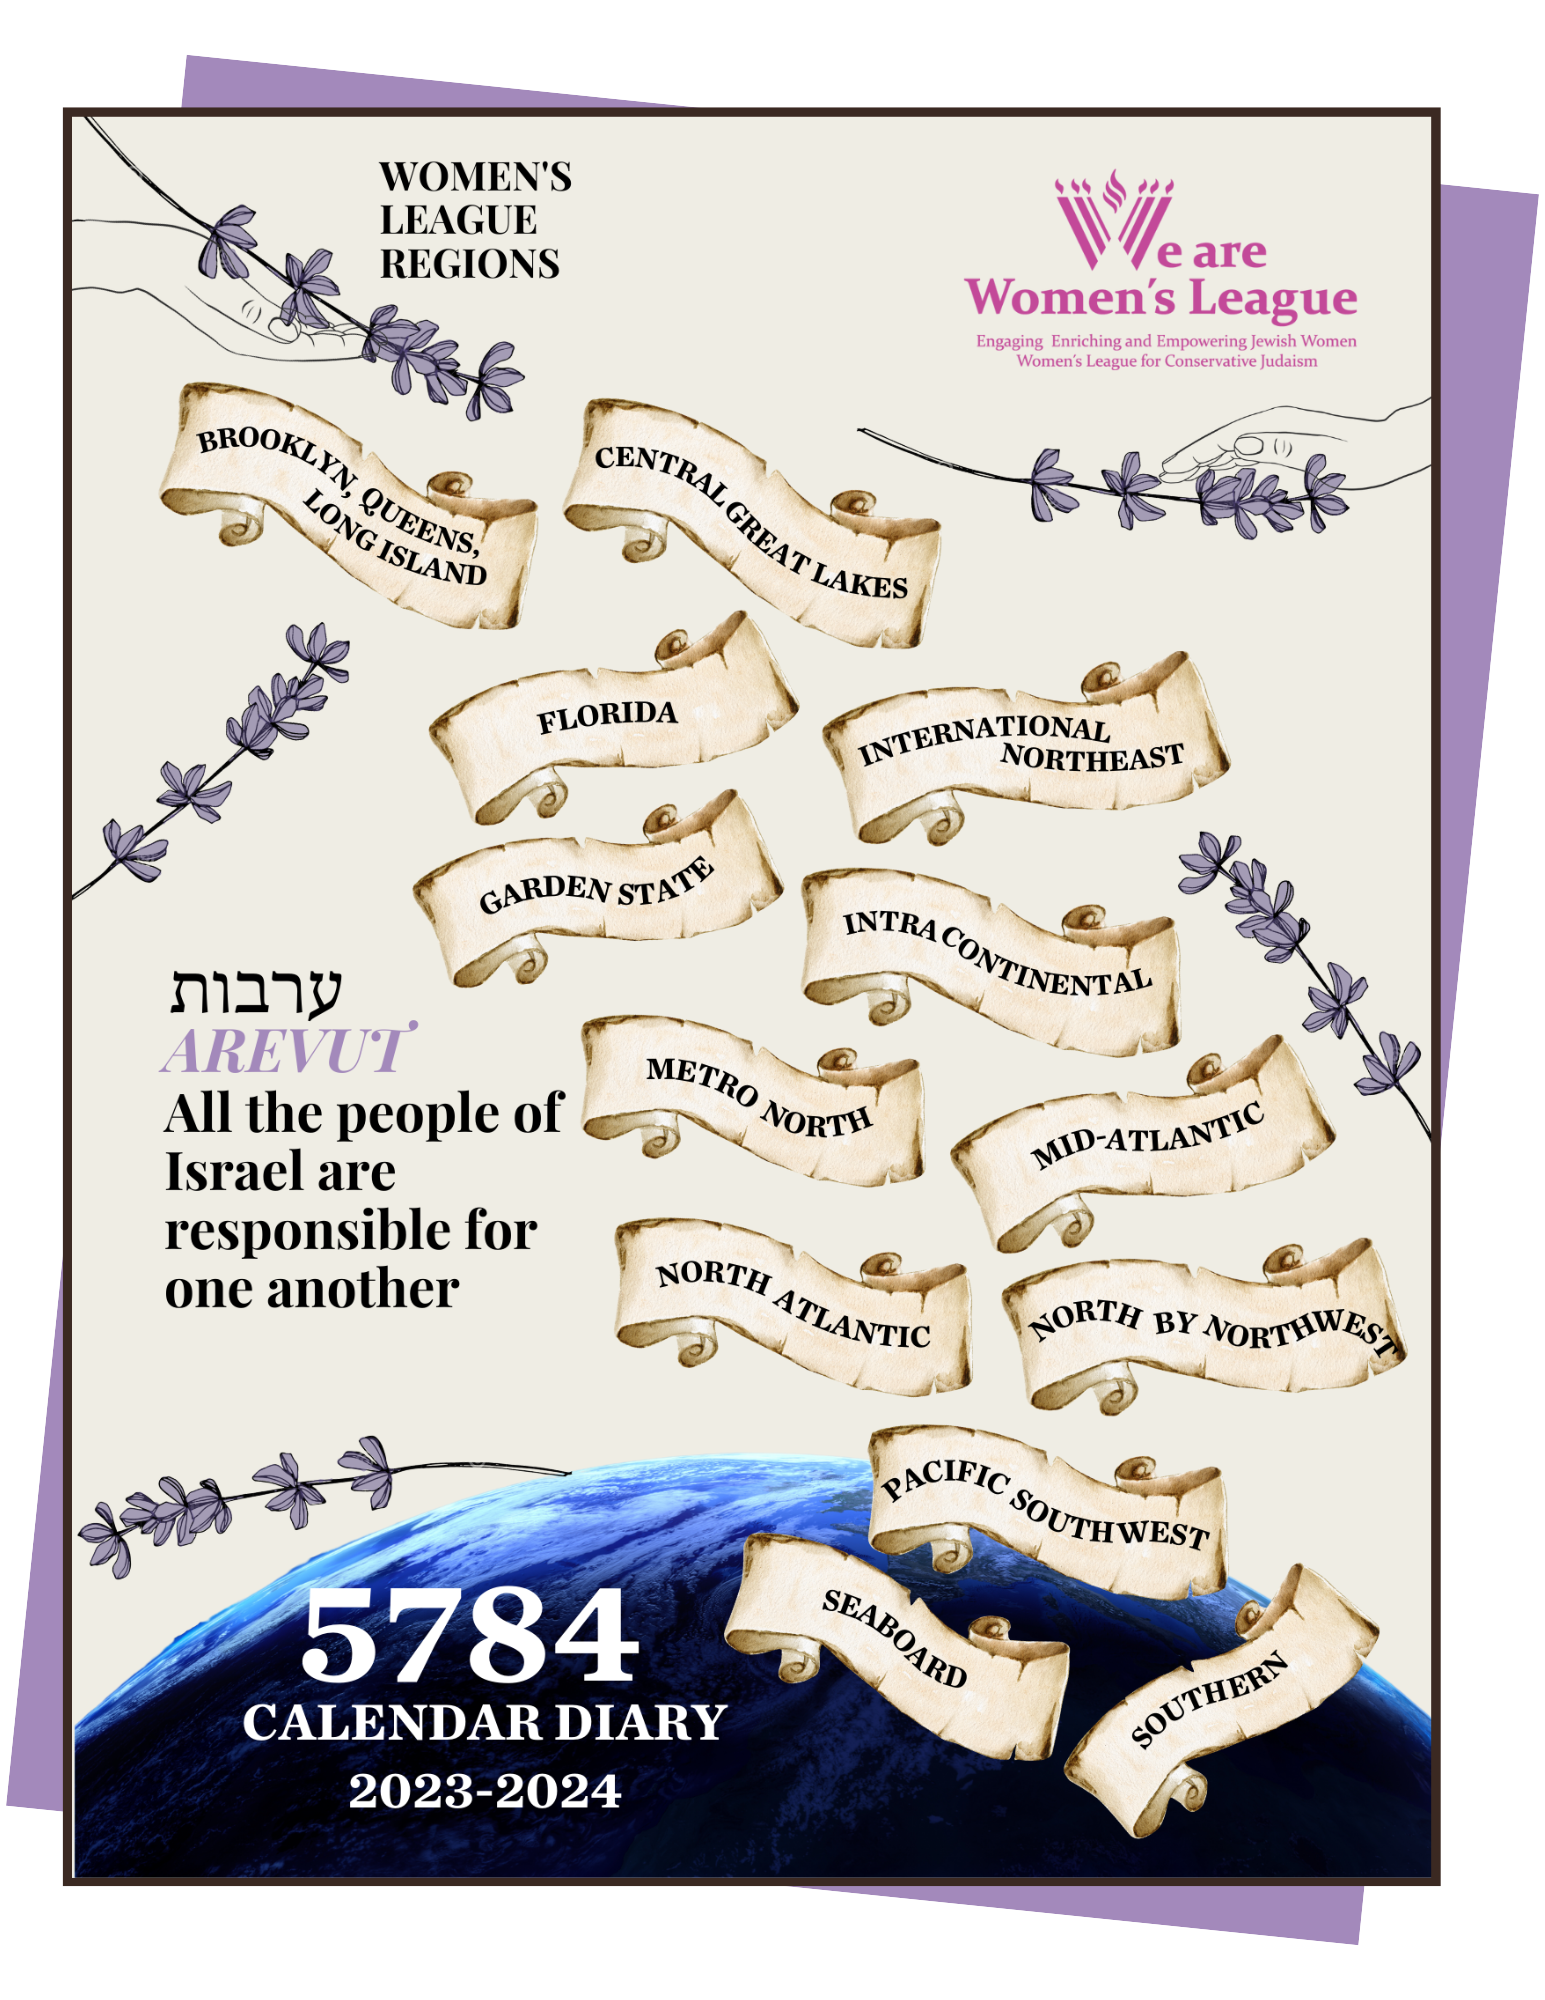 Publications & Materials for Sale  Women's League for Conservative Judaism  - Jewish Women's GroupWomen's League for Conservative Judaism